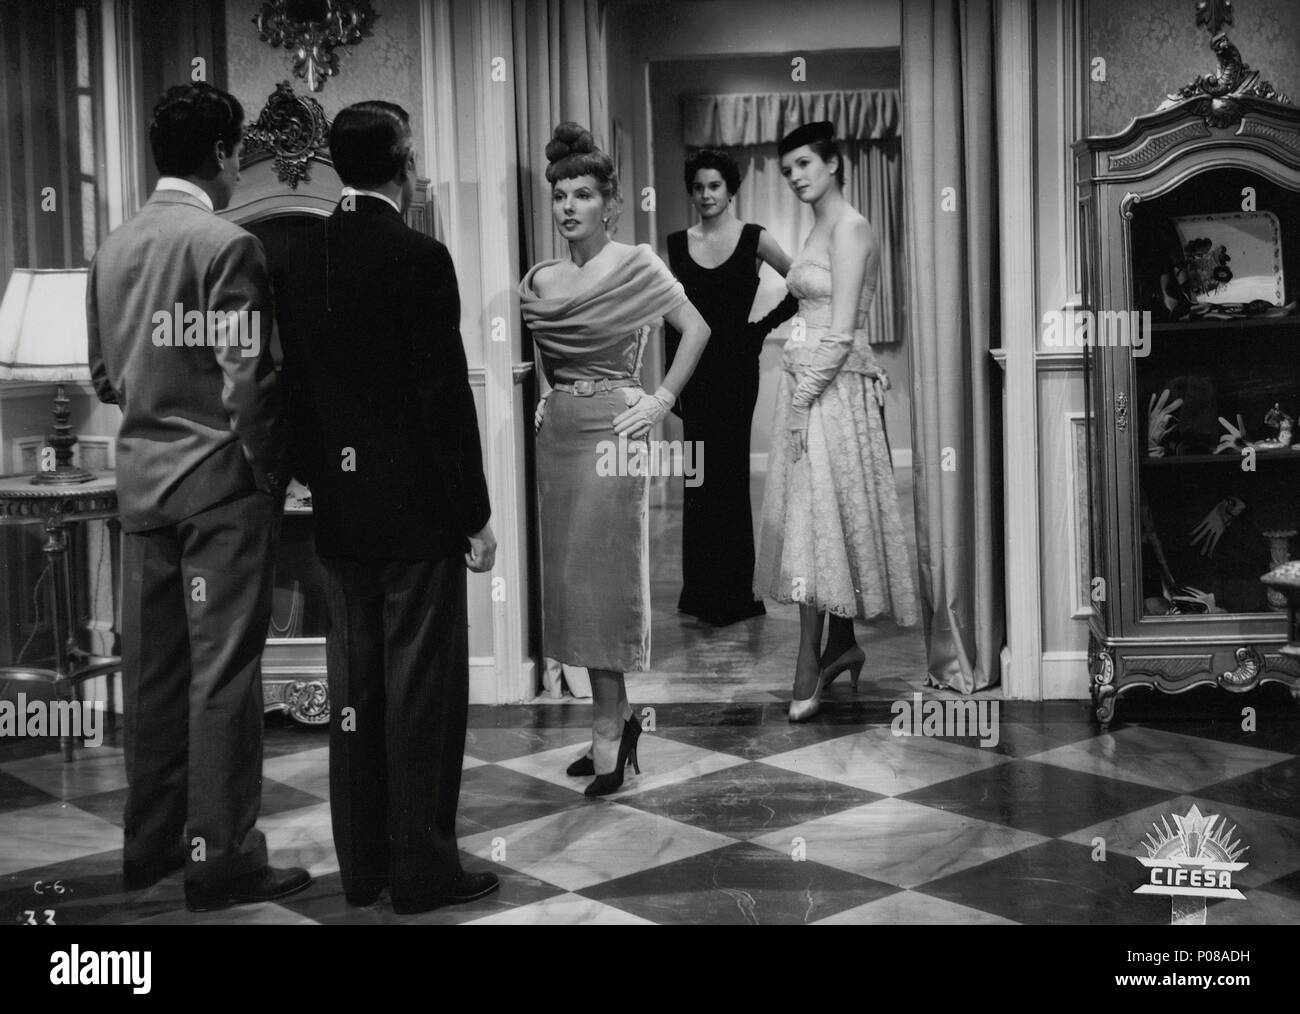 Original Film Titel: ALTA COSTURA. Englischer Titel: ALTA COSTURA. Regisseur: LUIS MARQUINA. Jahr: 1954. Stars: MARIA MARTIN. Credit: CINESOL, S.A/Album Stockfoto